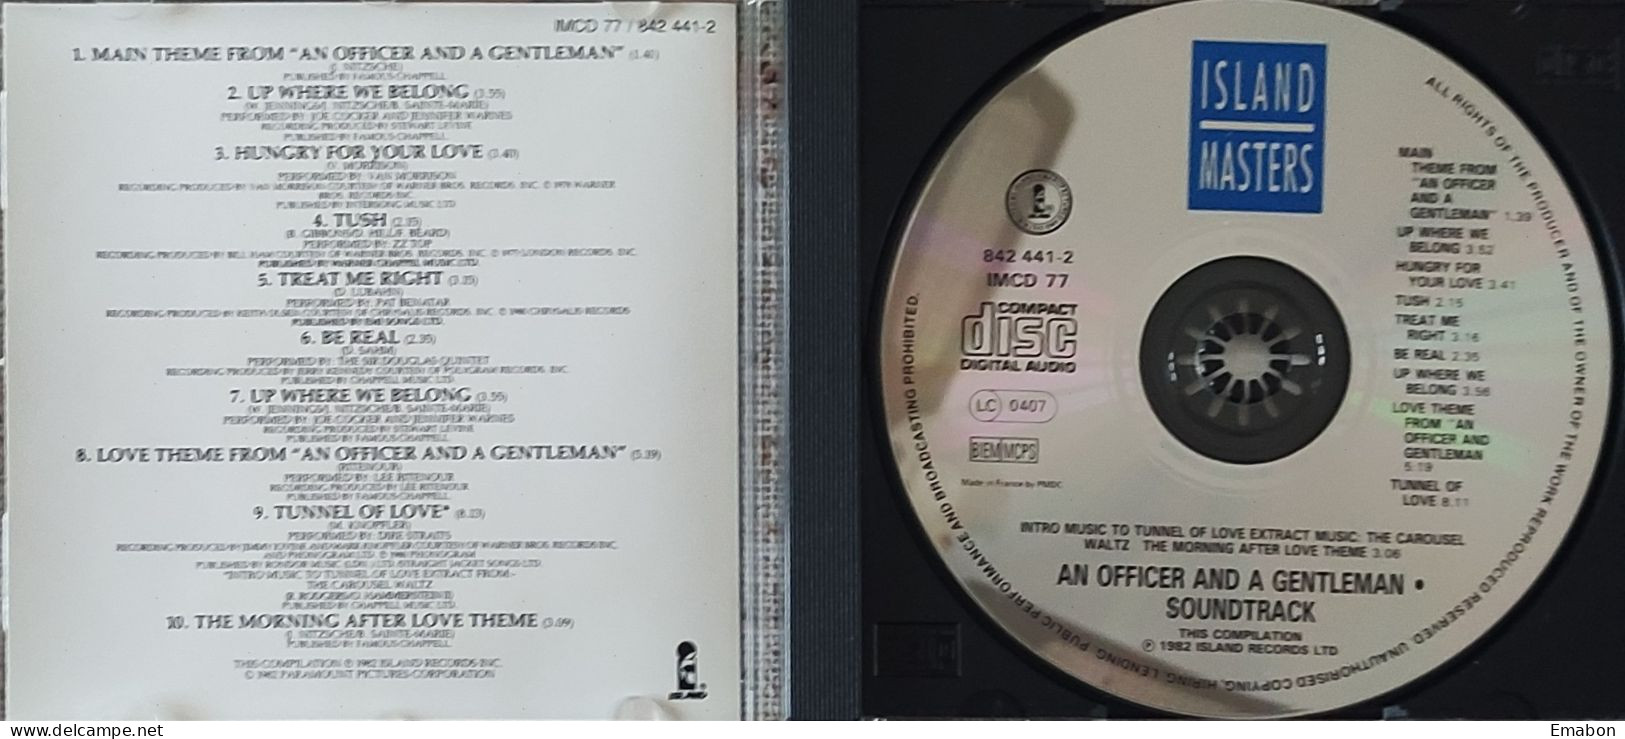 BORGATTA - FILM MUSIC  - Cd  RIDLEY SCOTT - AN OFFICER AND A GENTLEMAN - ISLAND MASTERS 1995 - USATO In Buono Stato - Soundtracks, Film Music